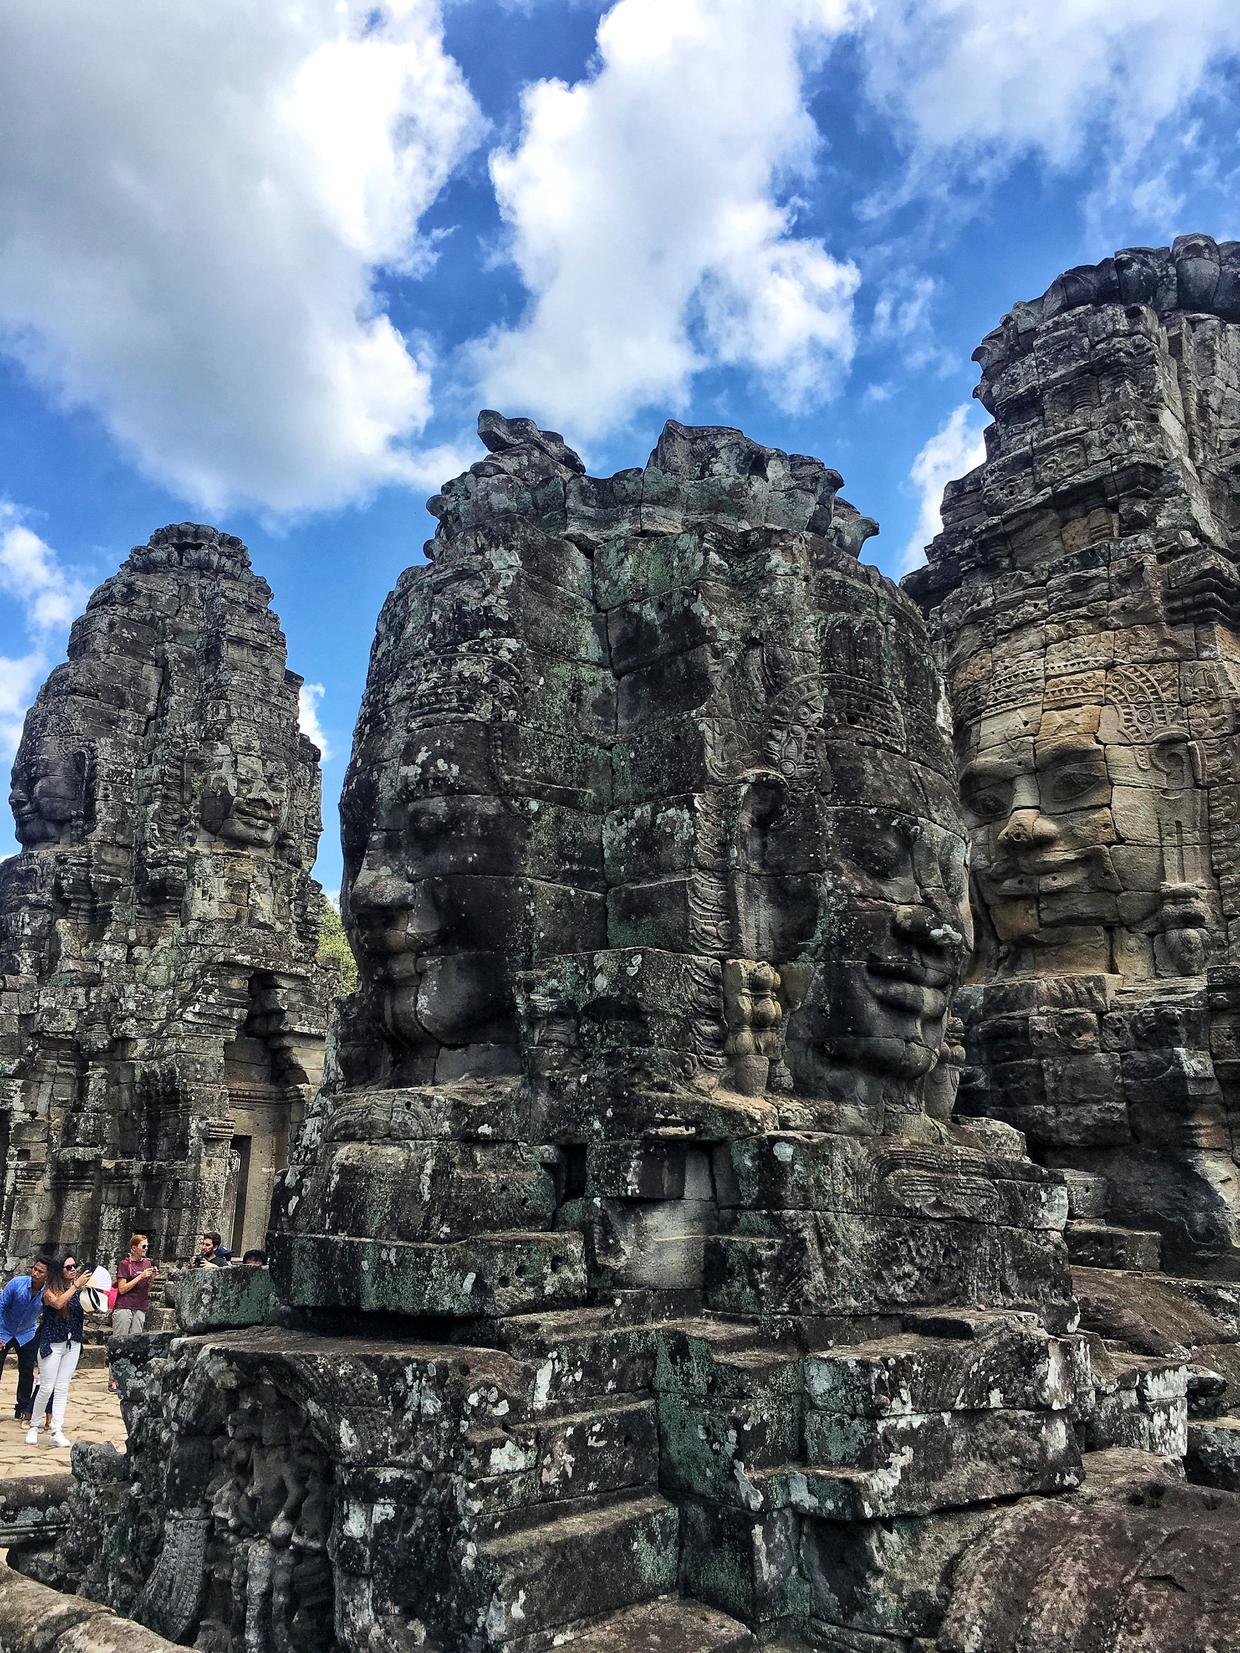 Journey Cambodia吴哥窟精华游行程，专人带领深入了解吴哥窟！ | Come On Lets Travel 走吧！我们旅行去！